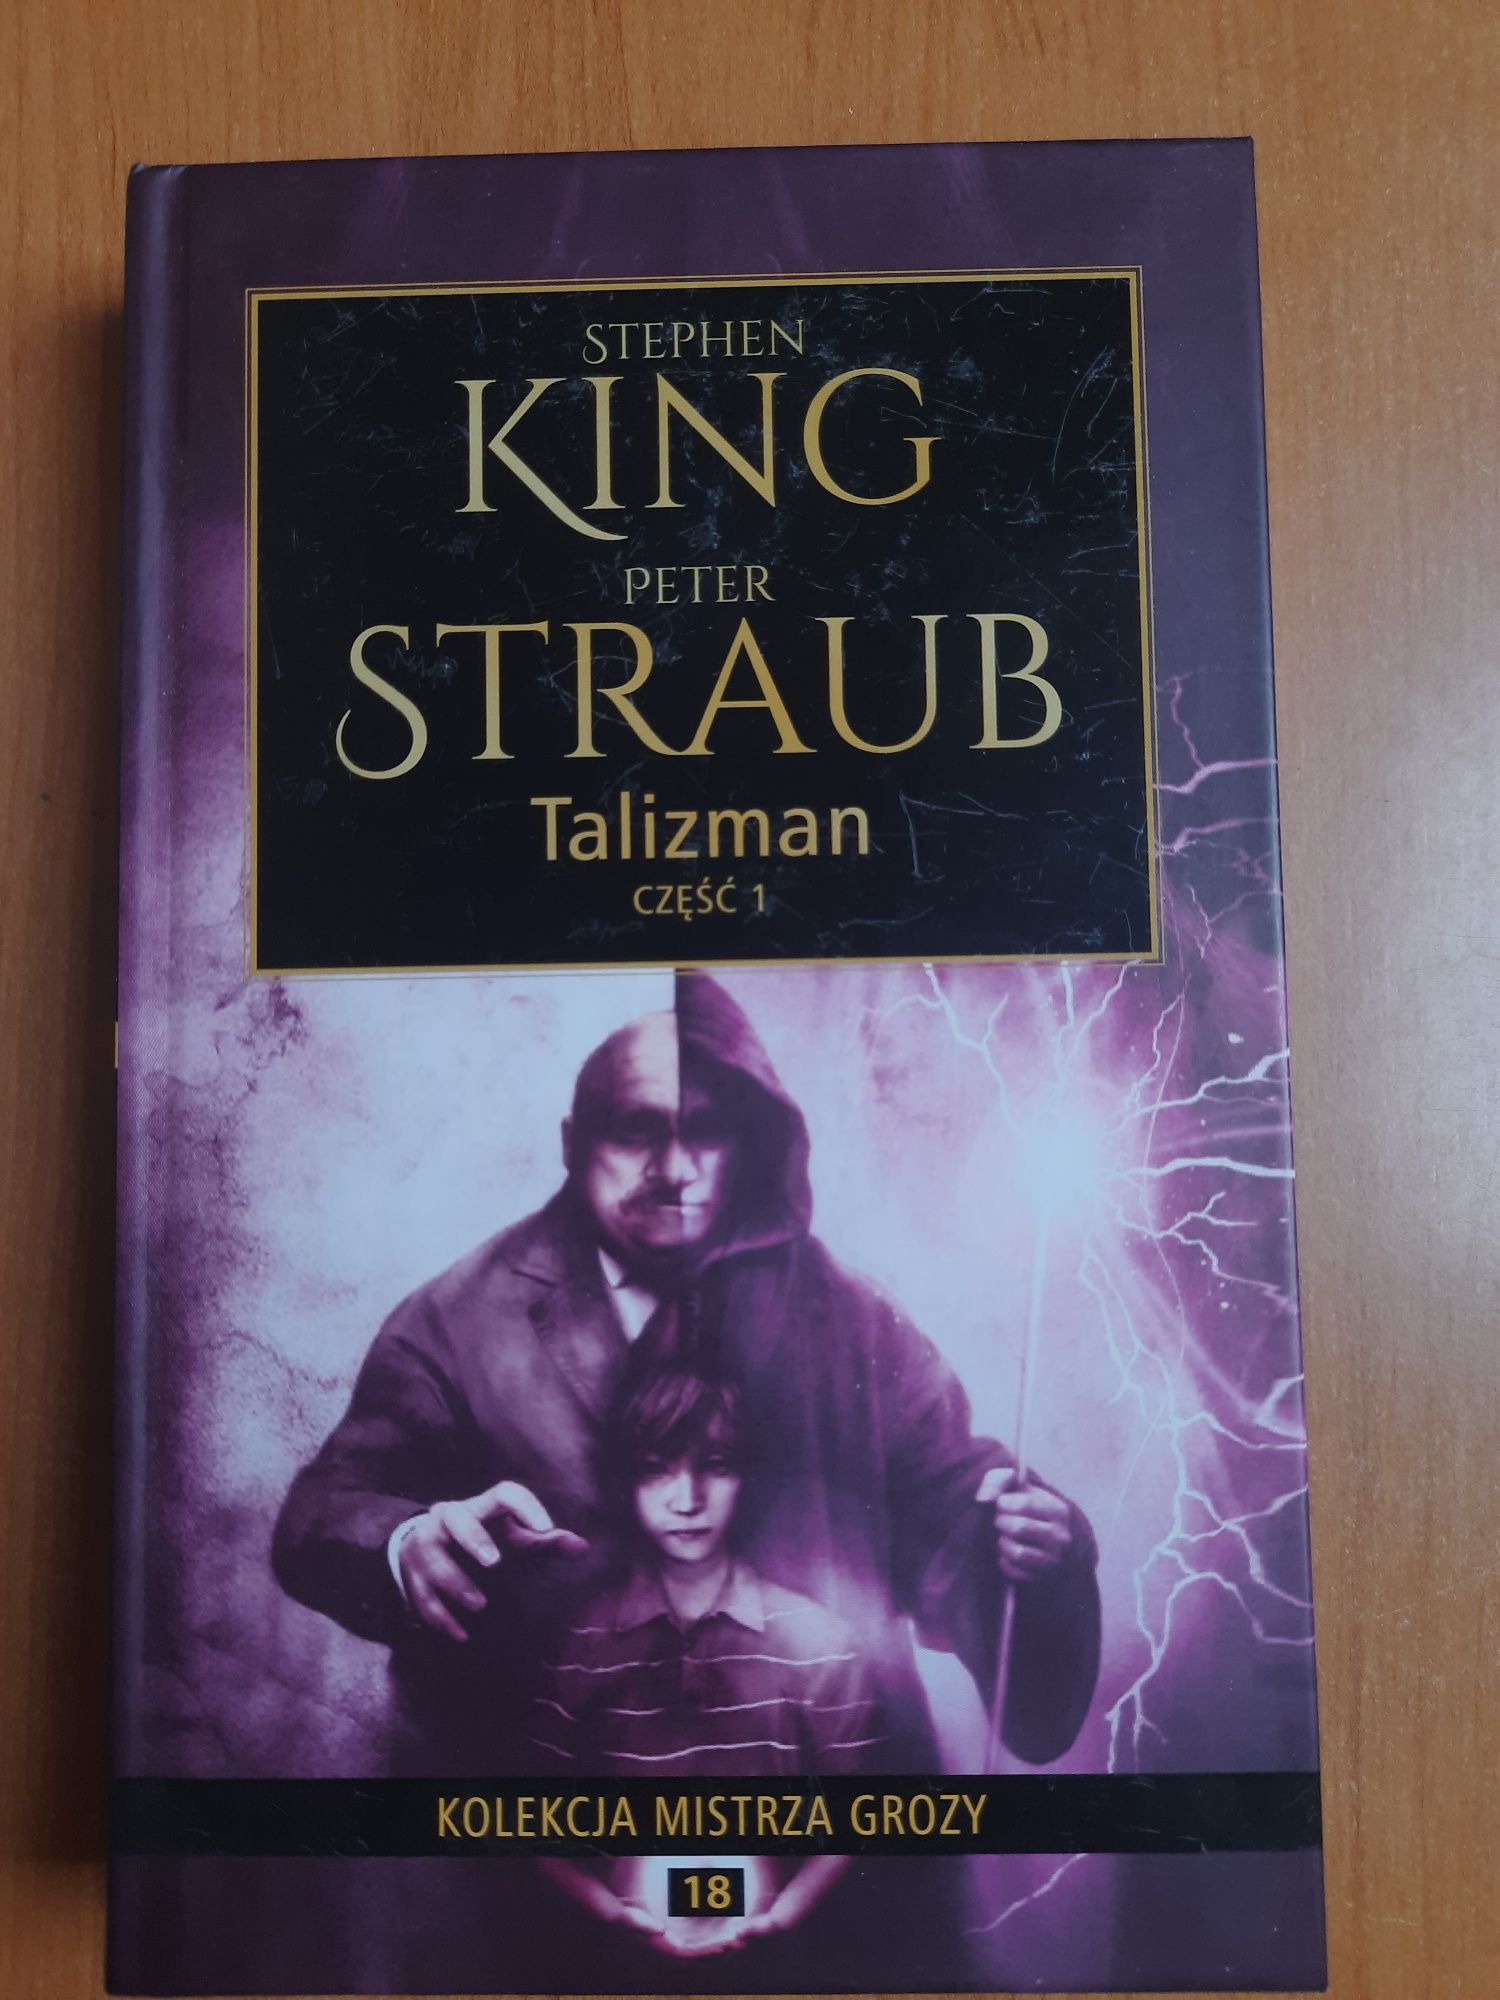 Stephen King talizman części.1